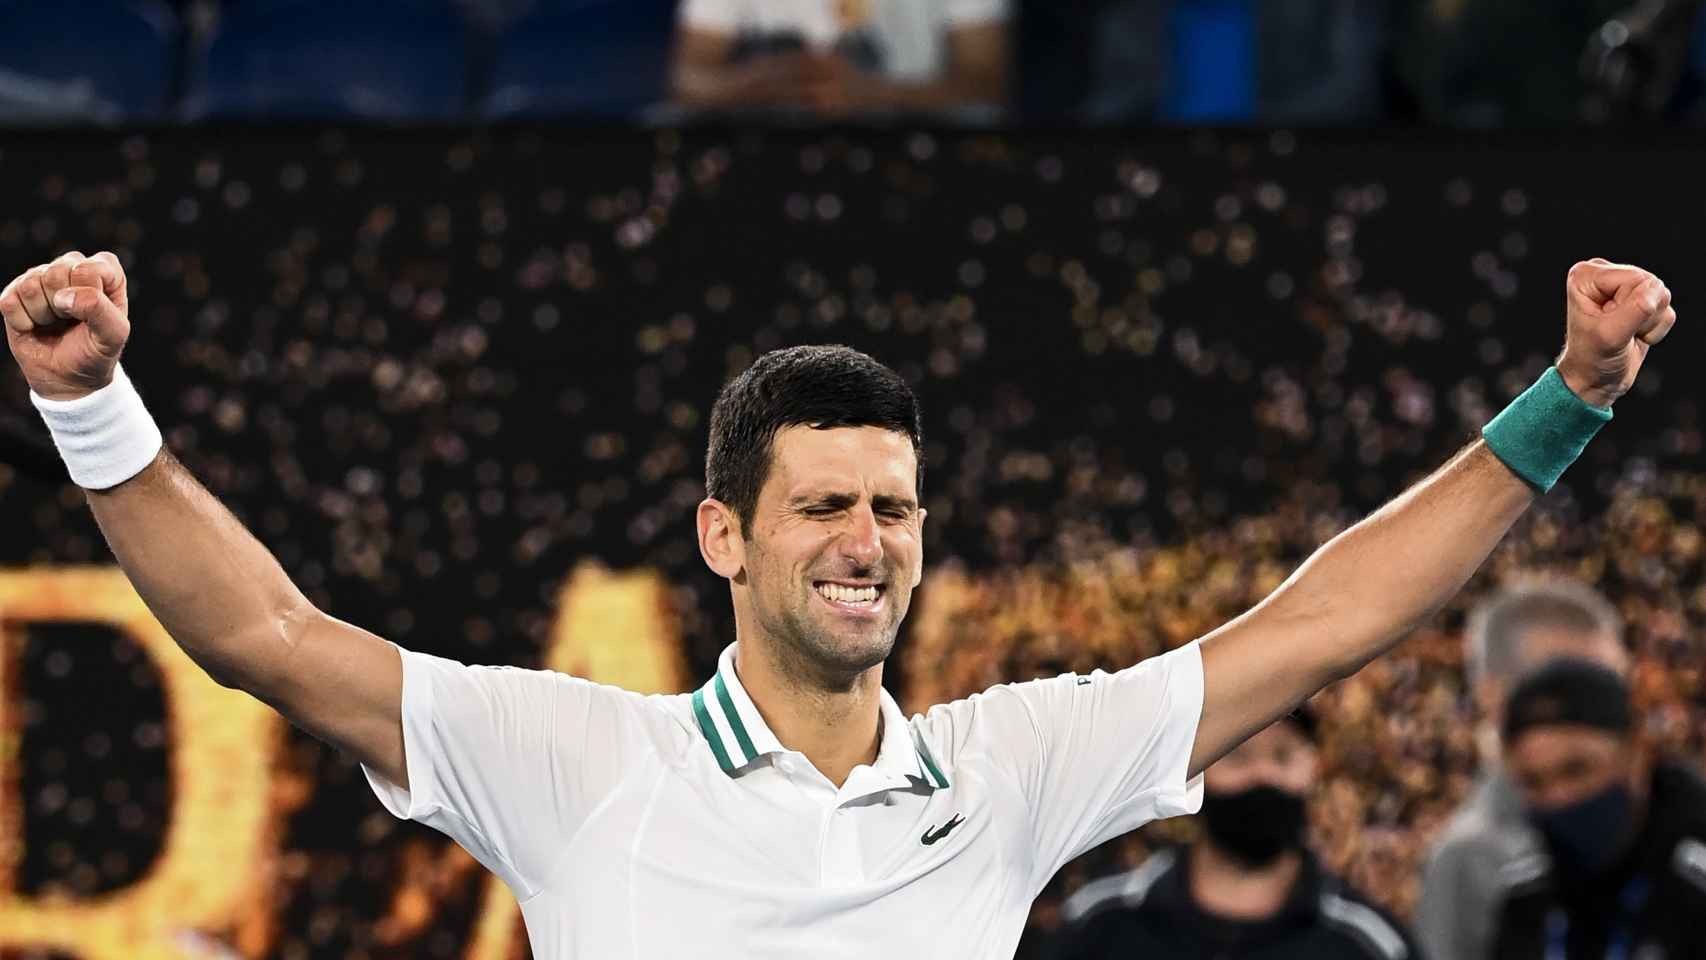 Djokovic celebra su victoria en el Open de Australia 2021